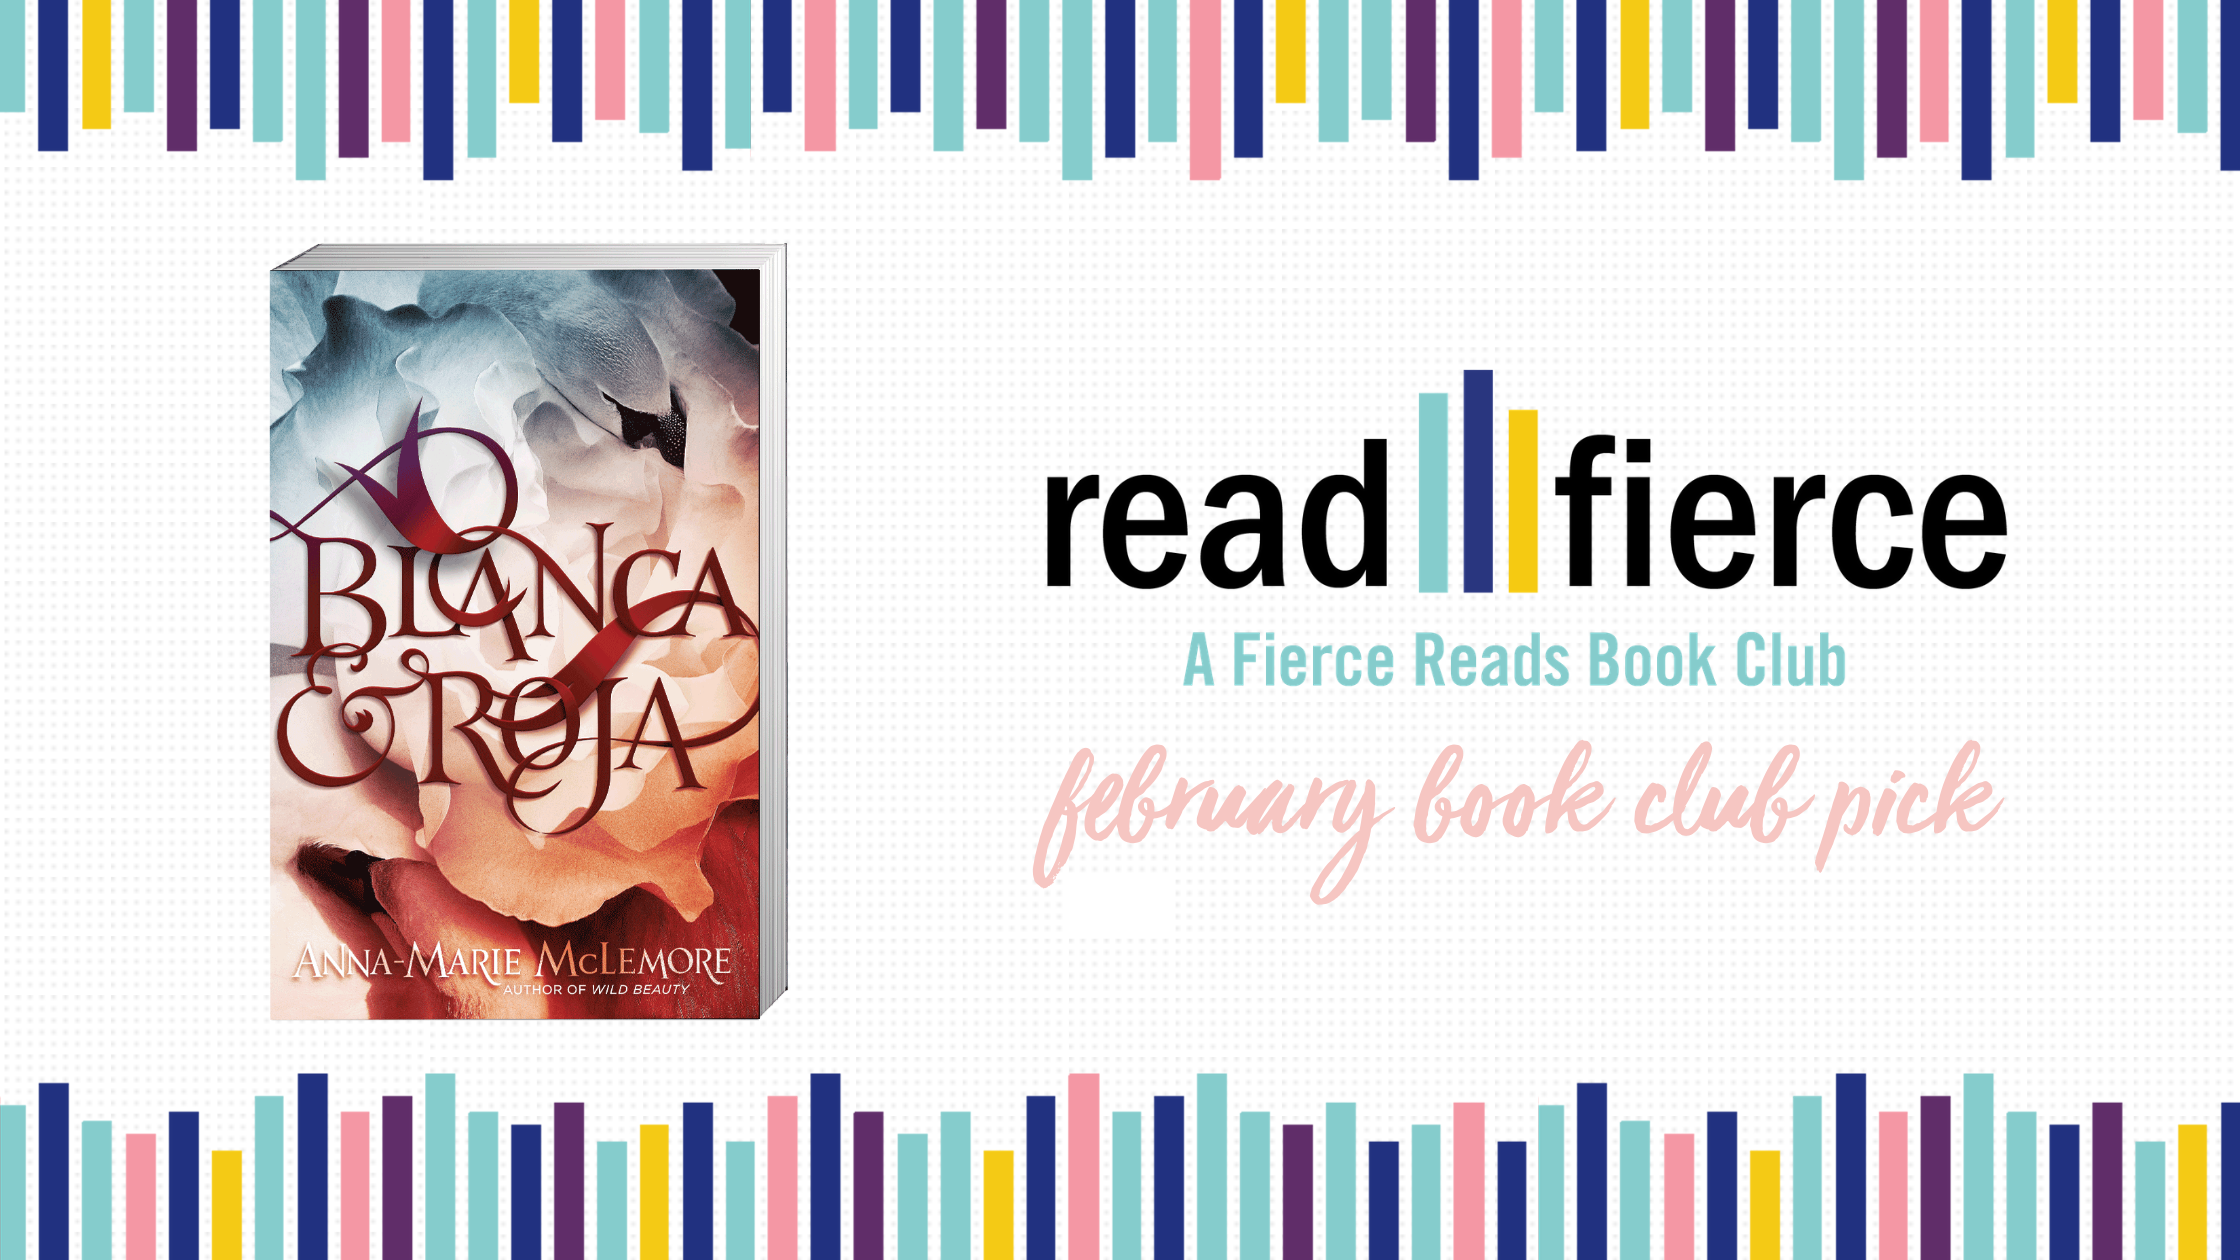 February 2021 Read Fierce Book Club Pick